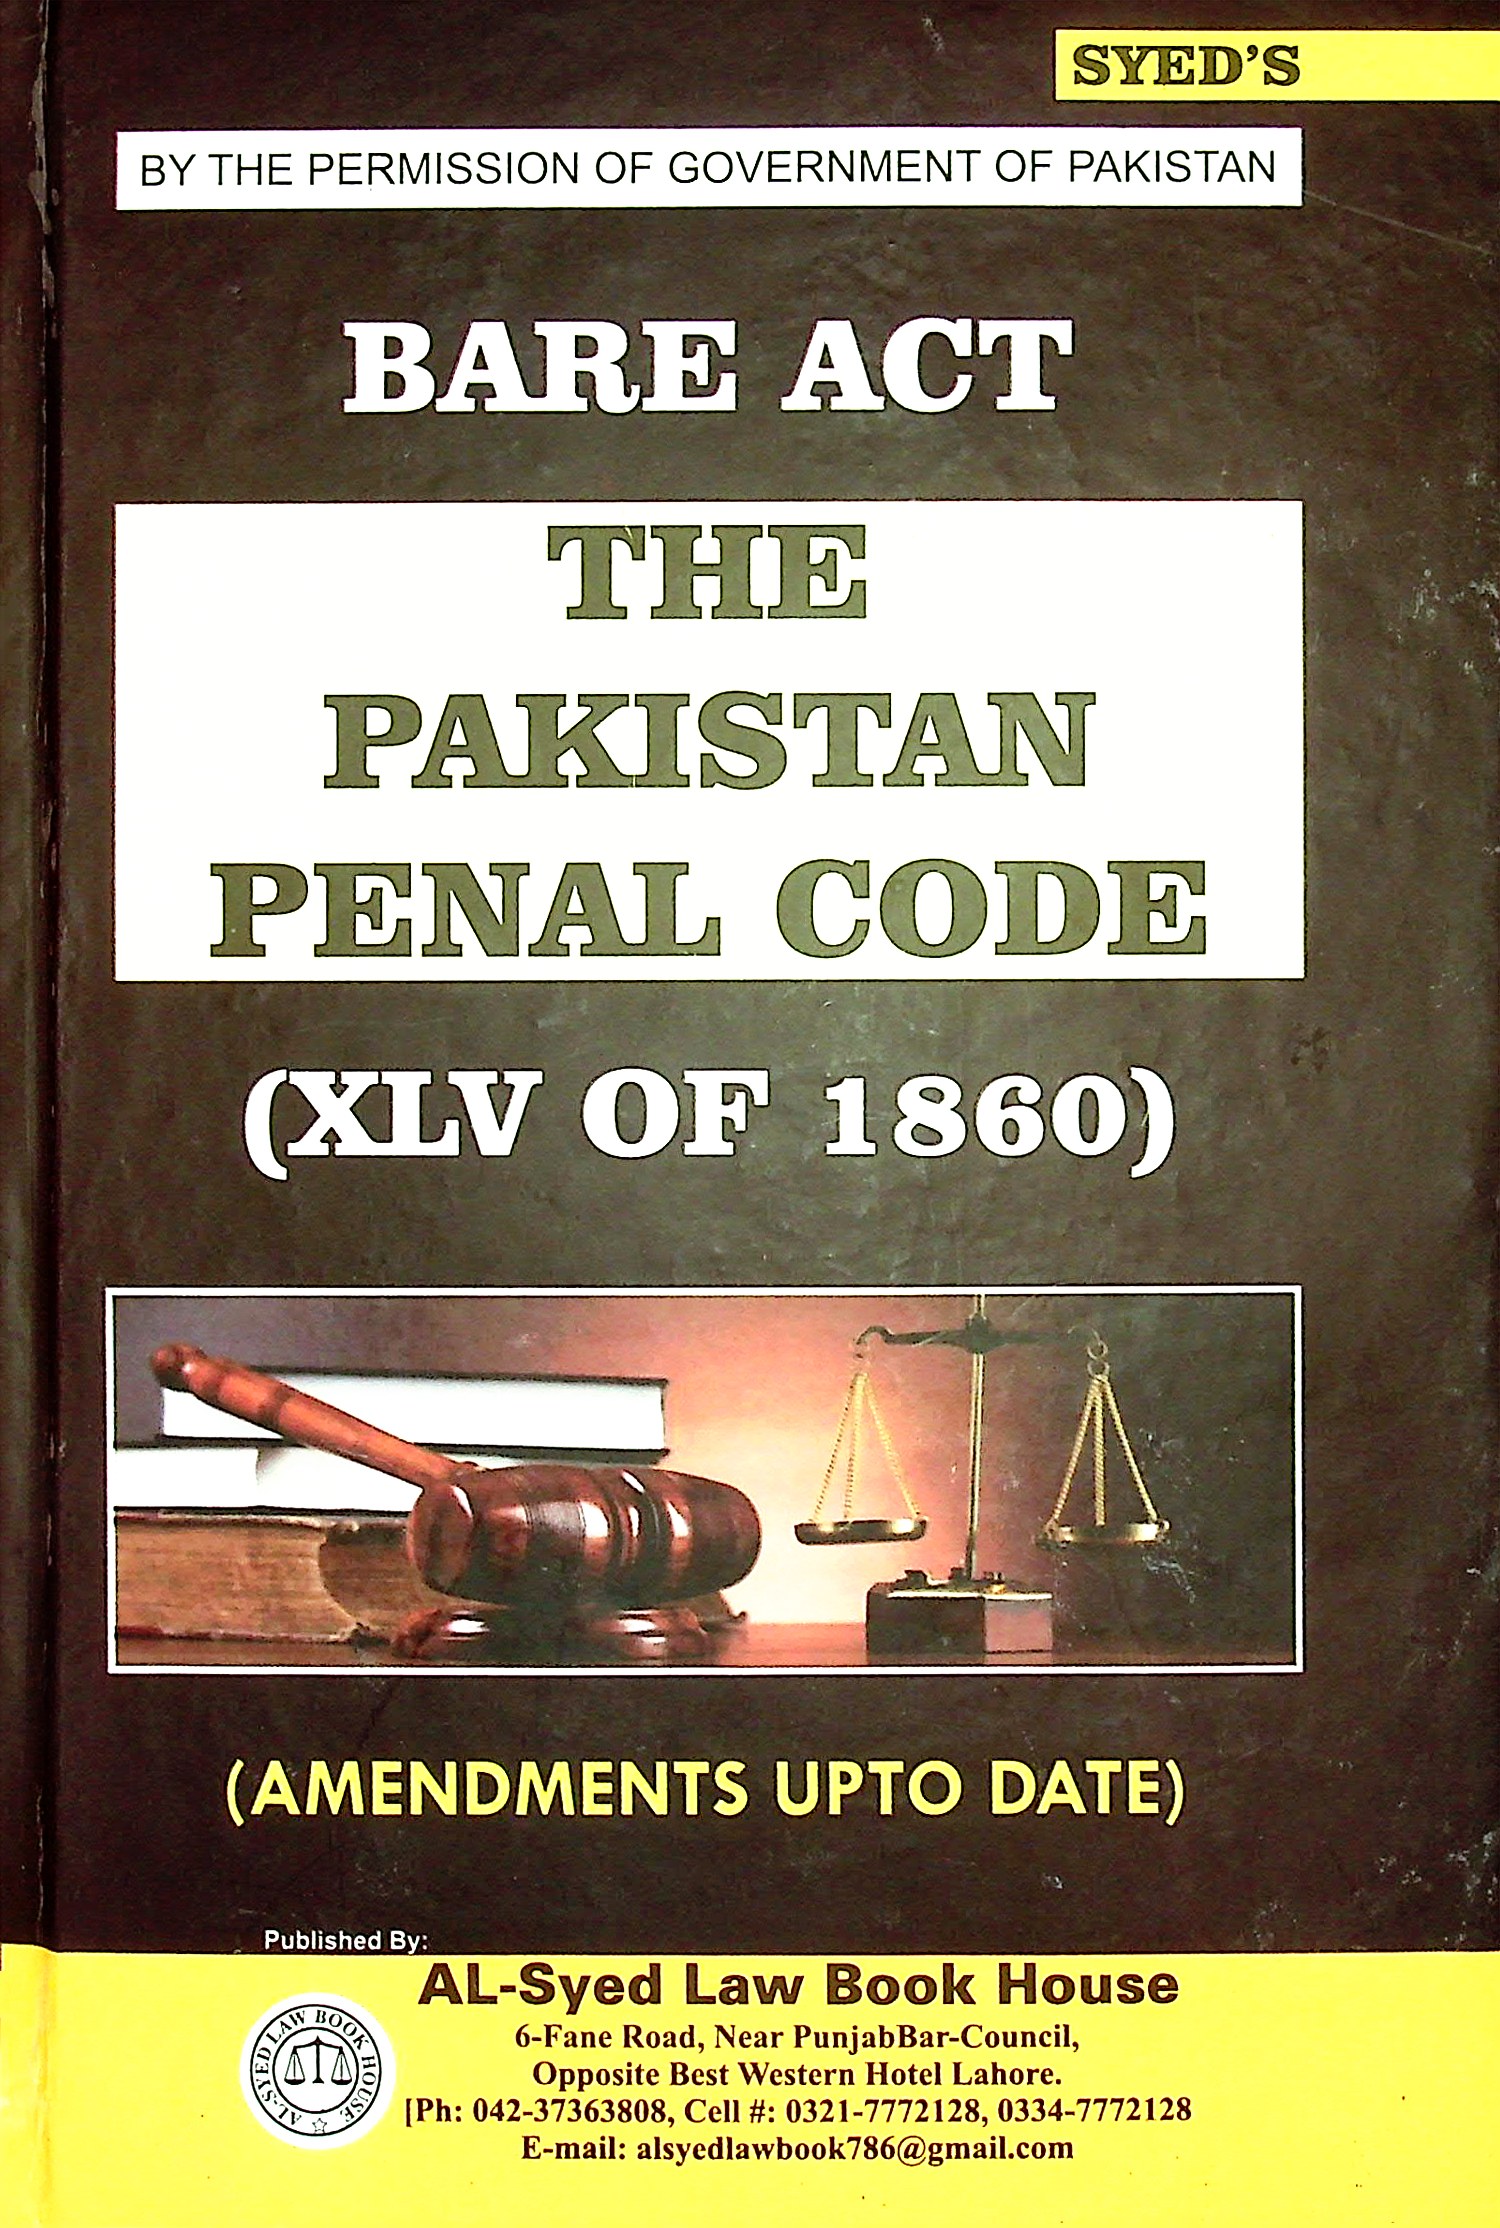 The Pakistan penal code, 1860 (XLV of 1860) :